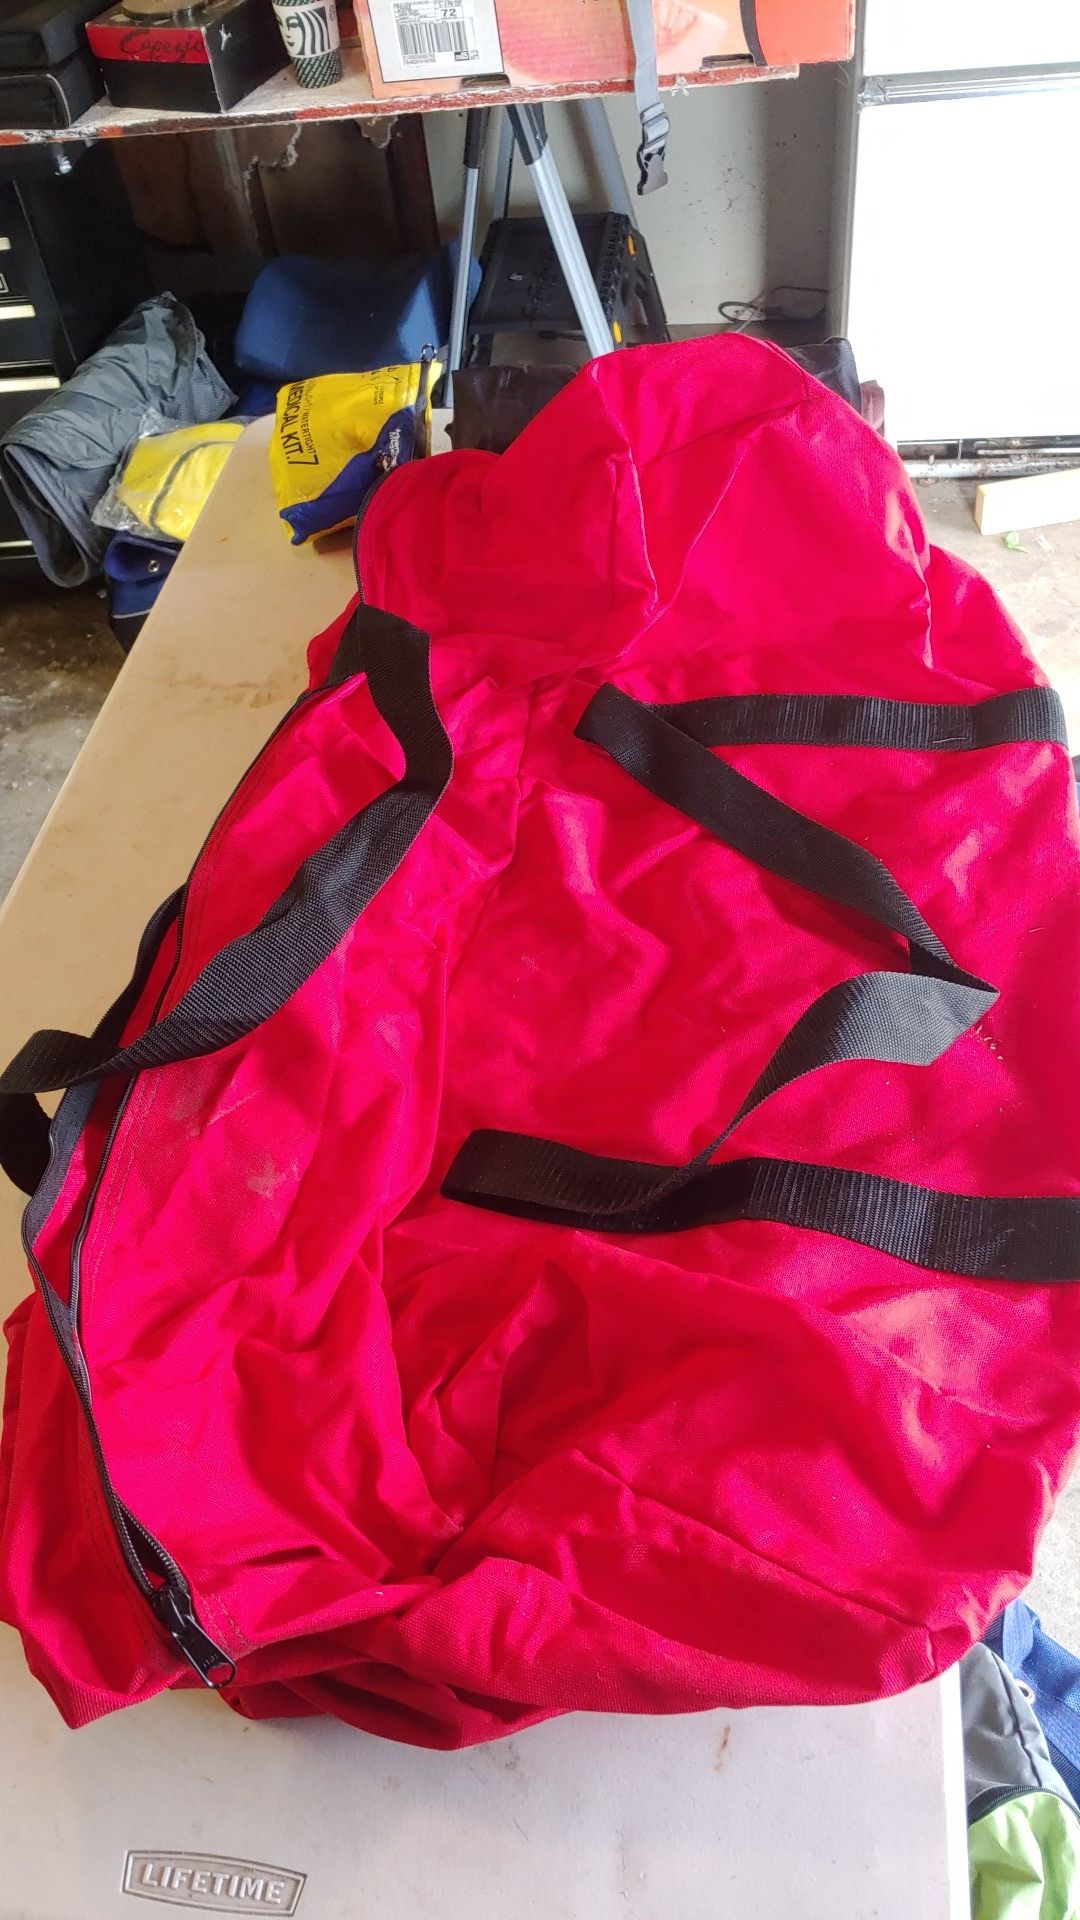 Red zip up duffle bag